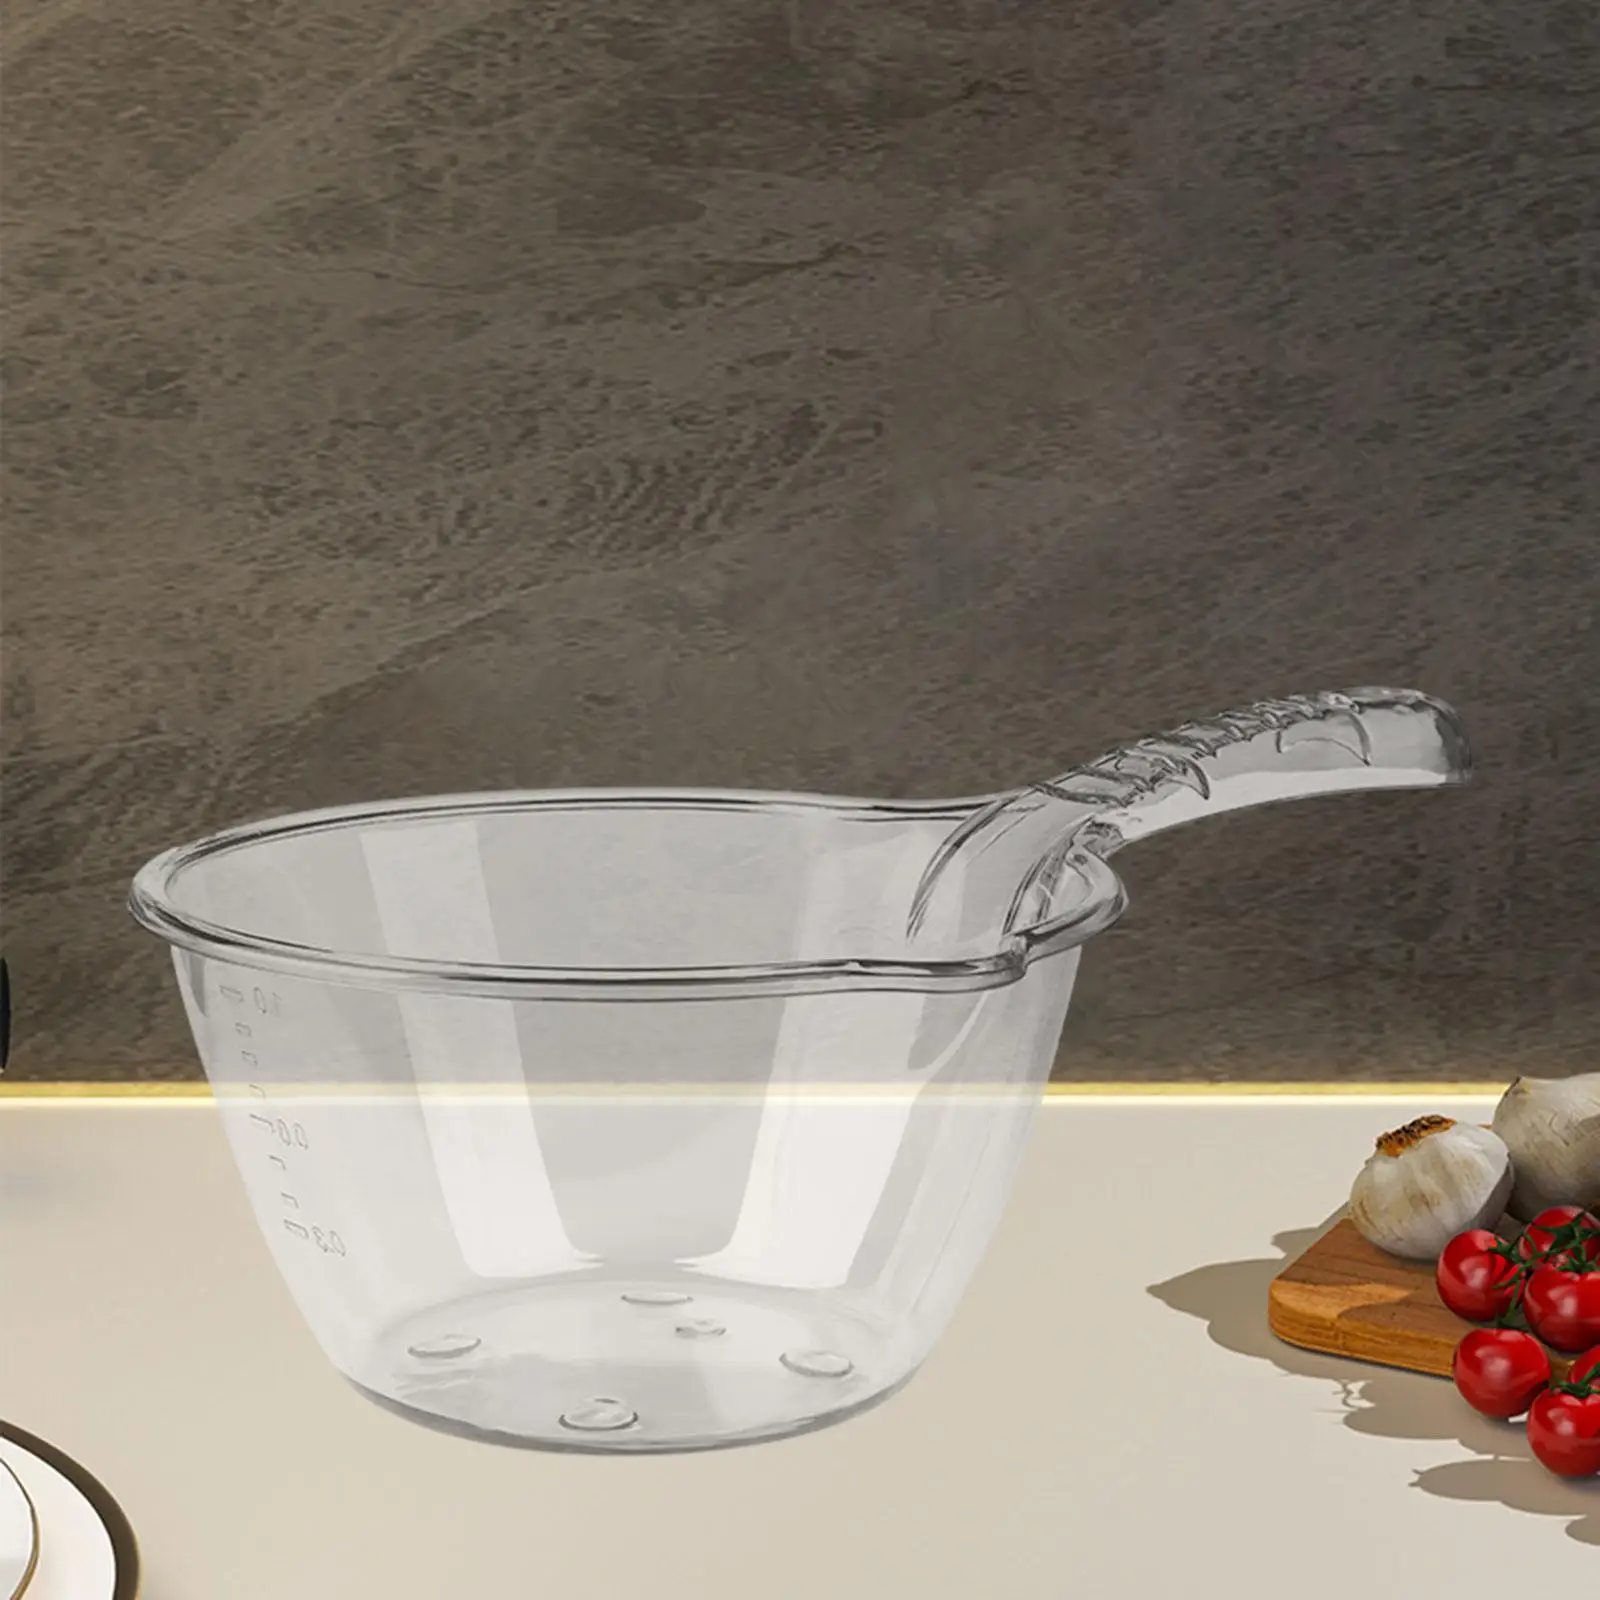 Bath Ladle Spoon with Scale Soup Ladle Multifunction Fruit Vegetable Cleaning Pour Spoon for Bathroom Kitchen Gadget Garden